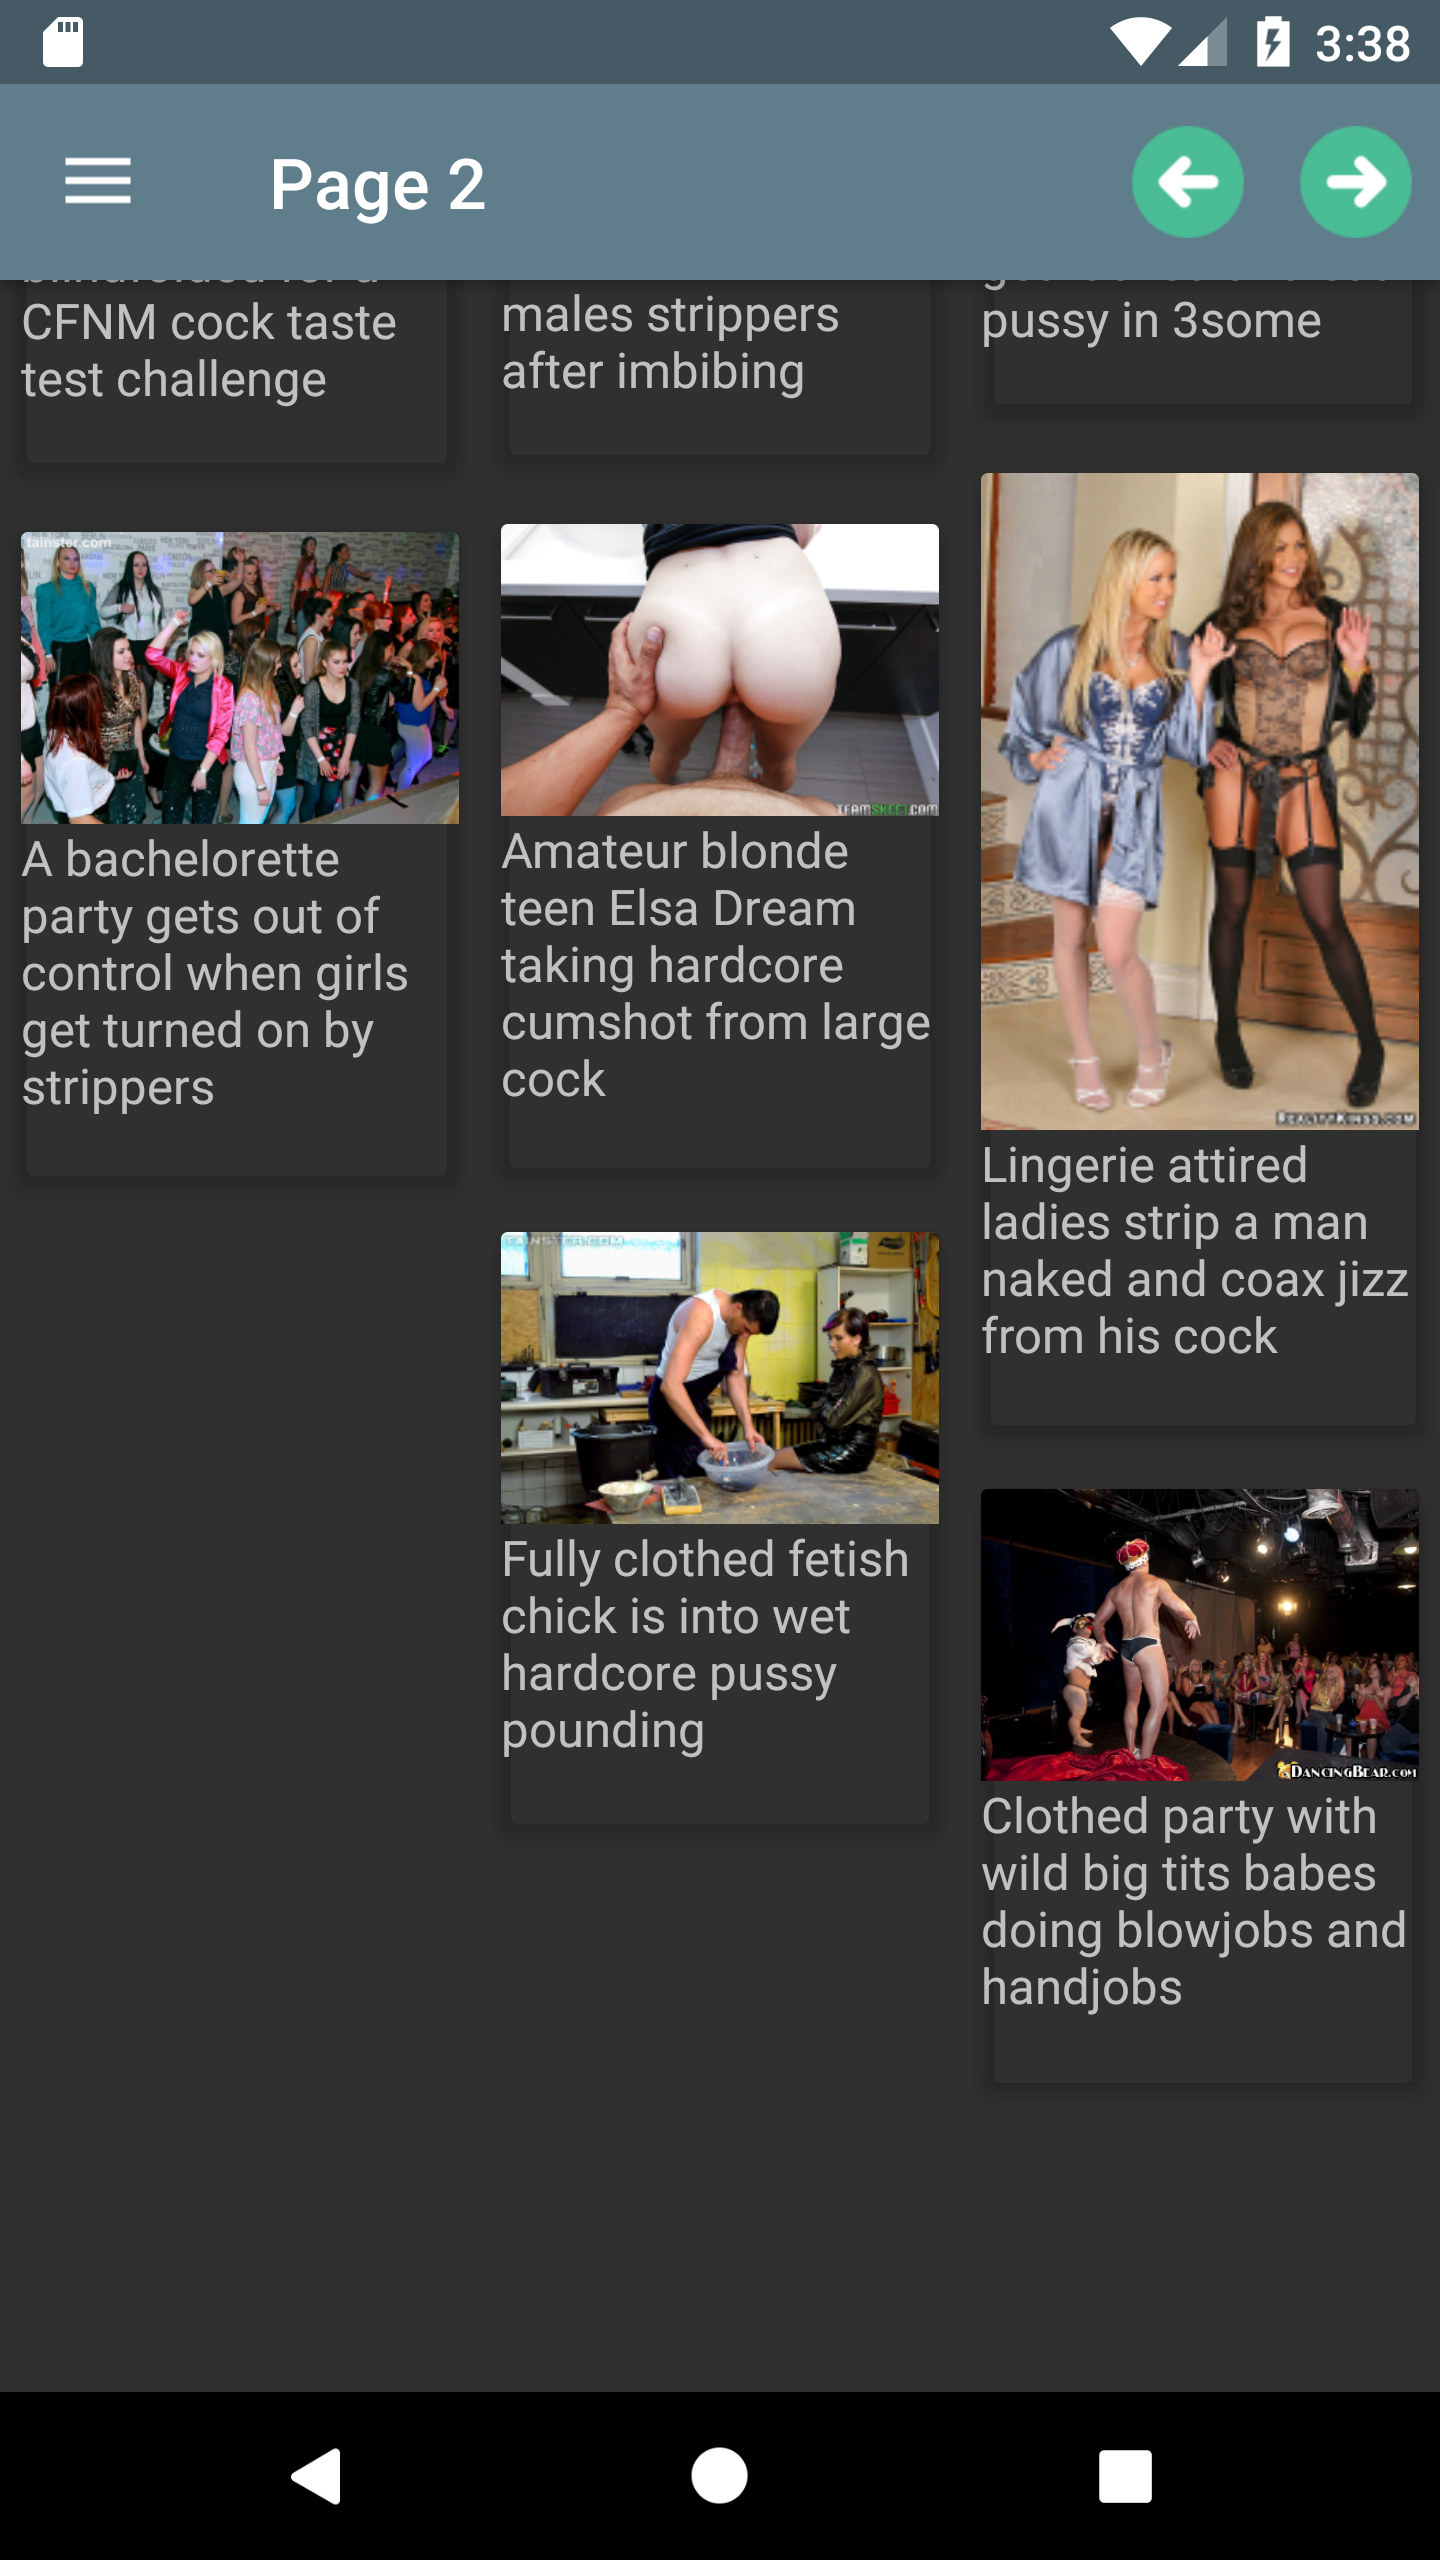 Cfnm Porn hentai,hot,apk,sexy,download,mature,good,app,pics,gallery,how,pornstars,hentei,apps,hentia,porn,galleries,cosplay,hantai,adult,android,photos,images